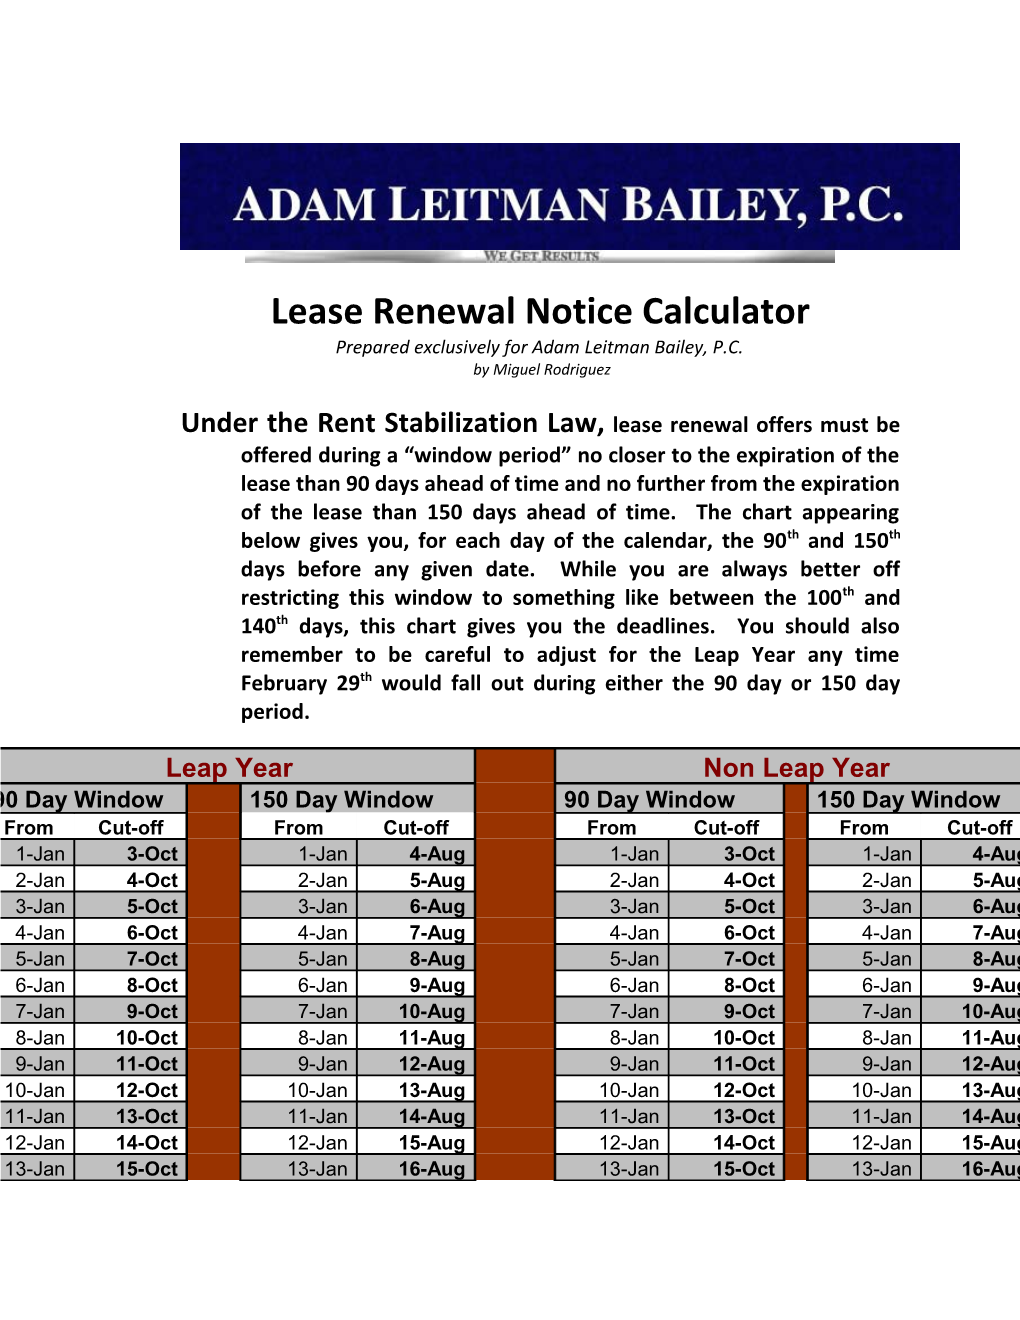 Adam Leitman Bailey, P.C. Lease Renewal Notice Calculator